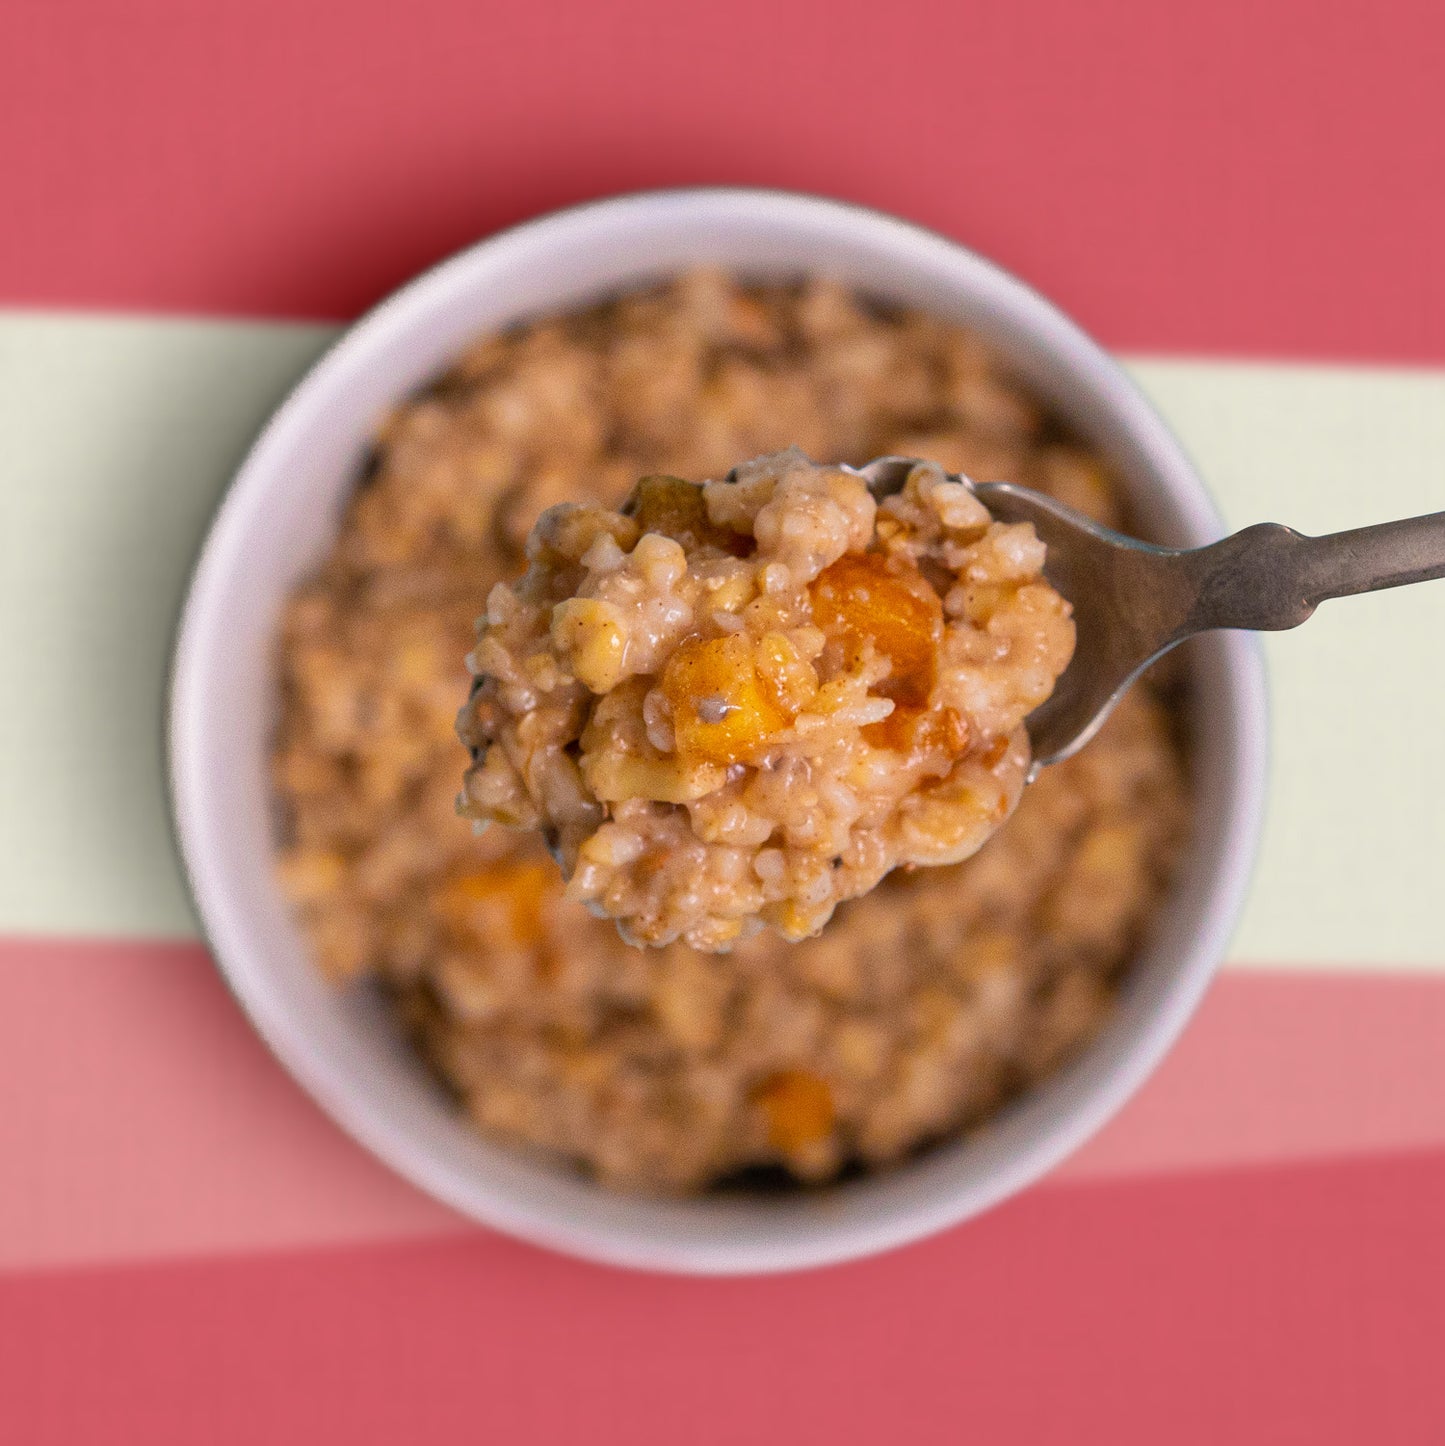 Apple, Cinnamon & Walnut Oatmeal Zoomed in with Spoon- Eat Proper Good